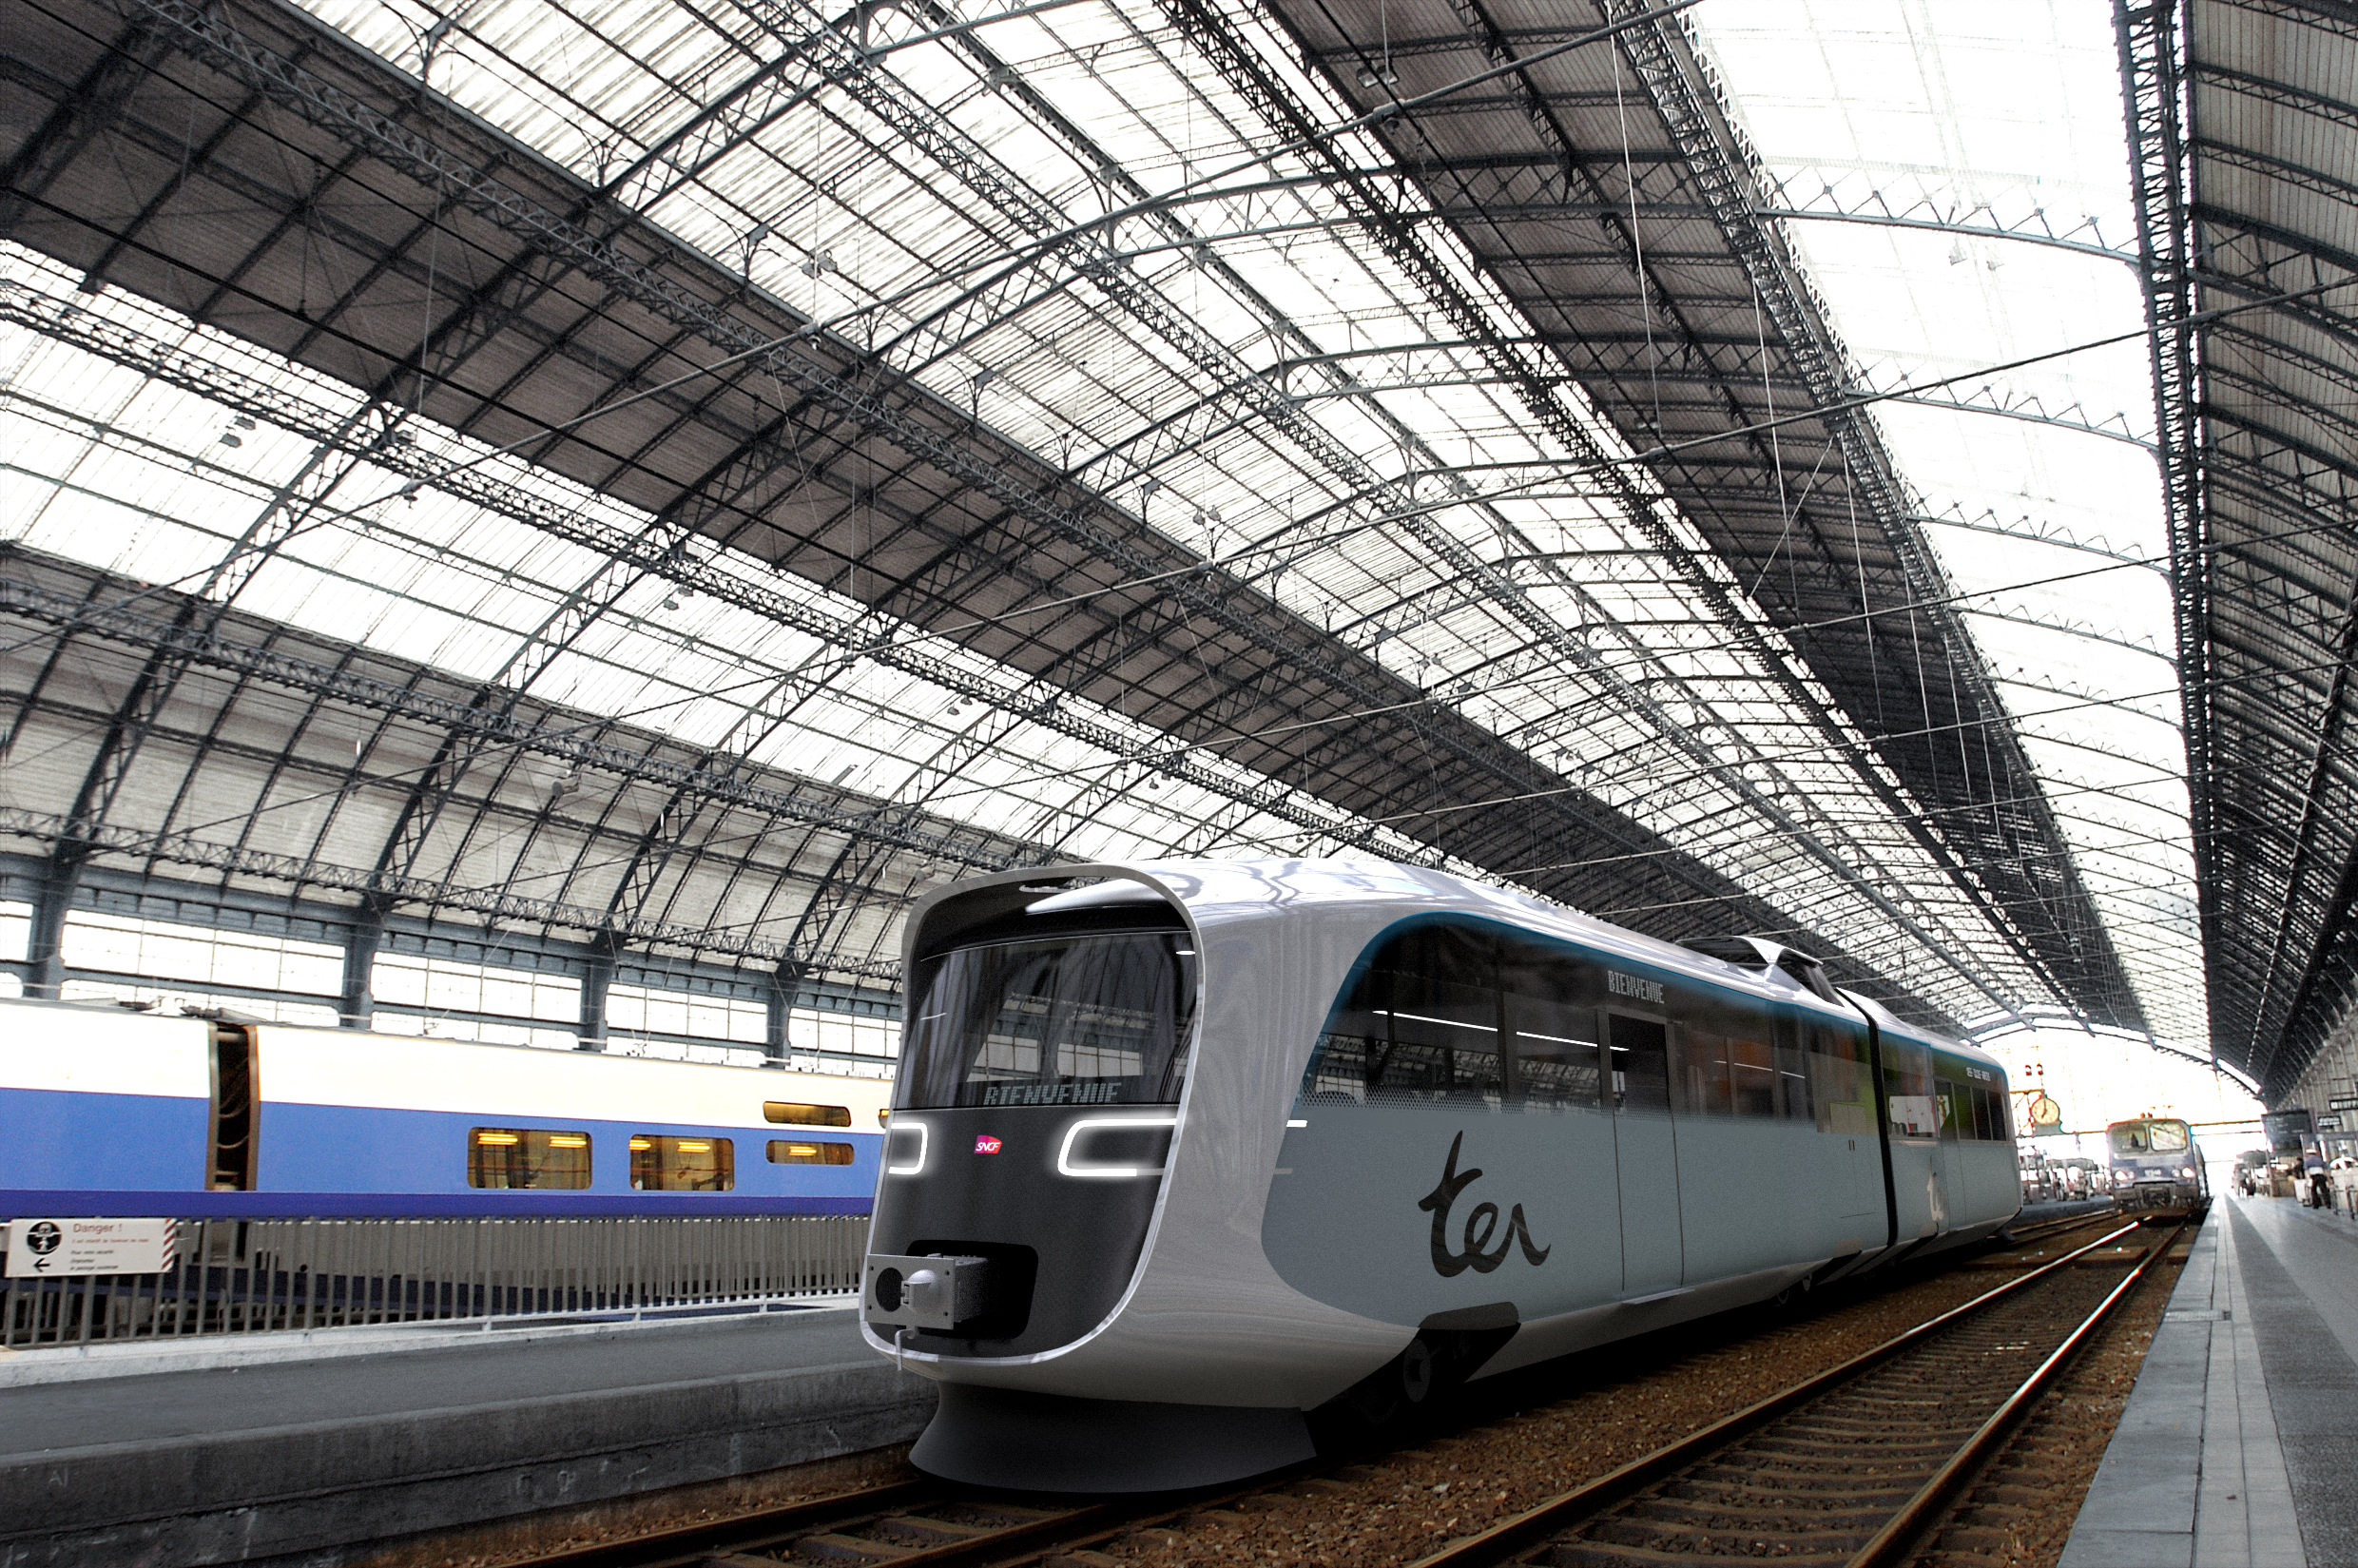 The Innovative Light Train in Bordeaux-St.Jean train station